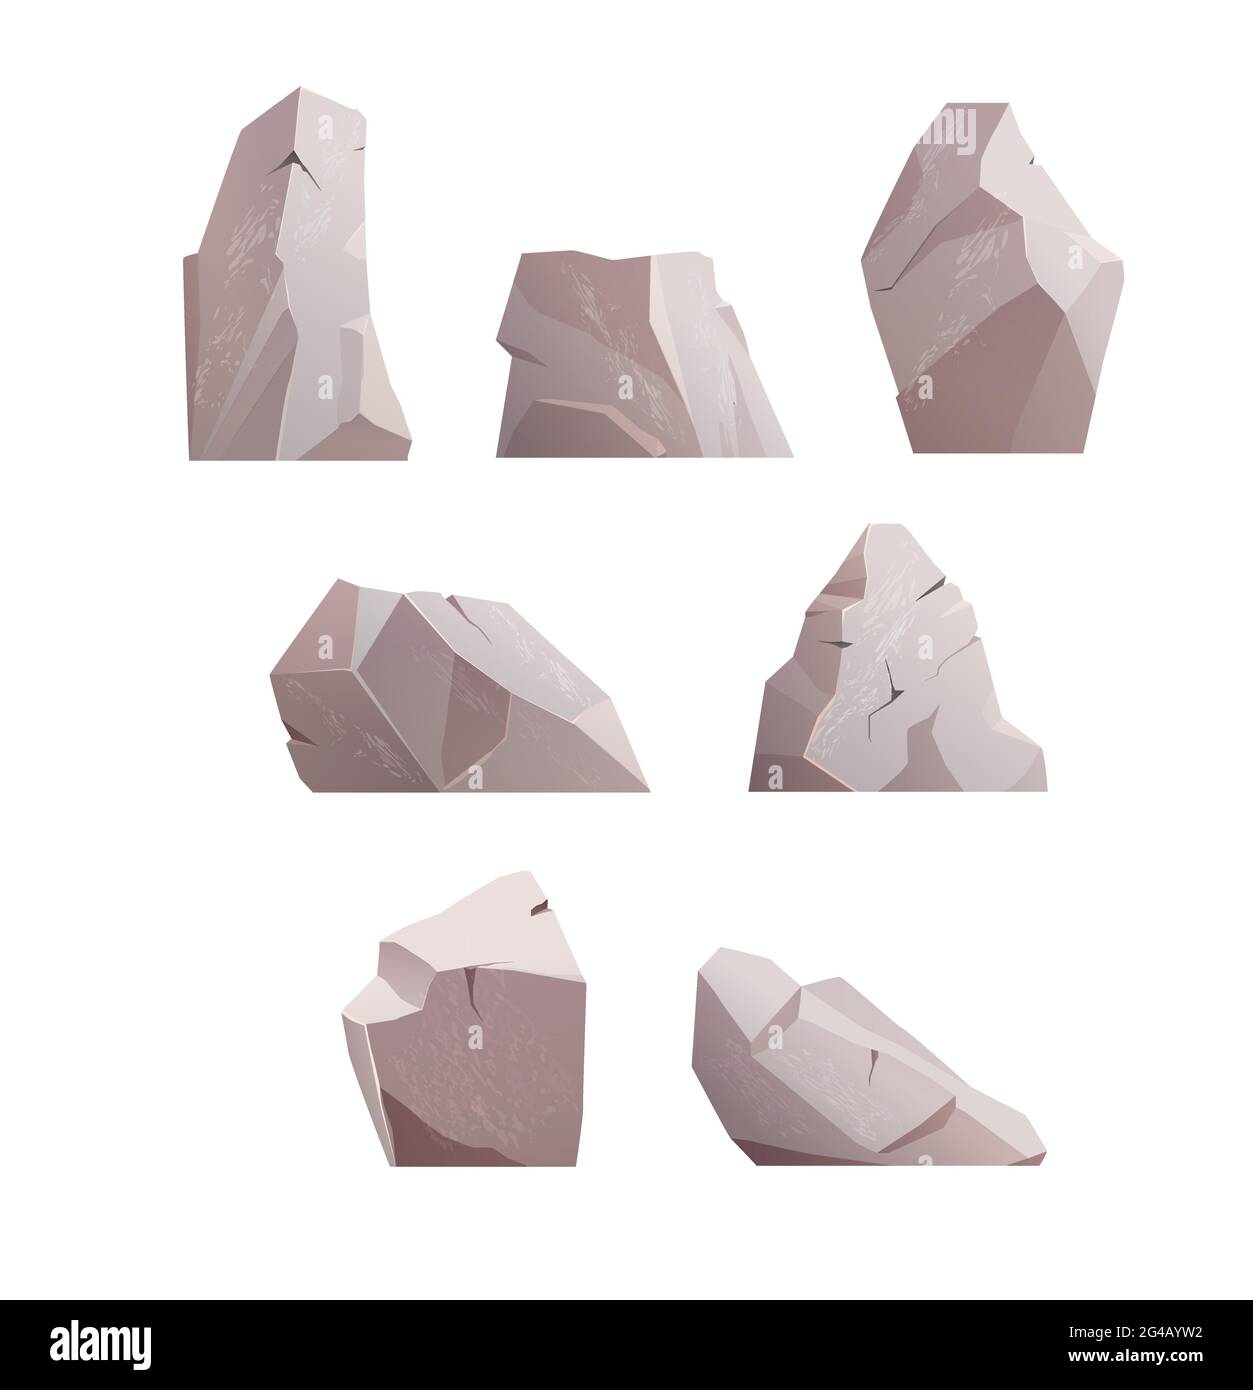 Rock stone. Nature objects. Cartoon vector illustration. Stock Vector